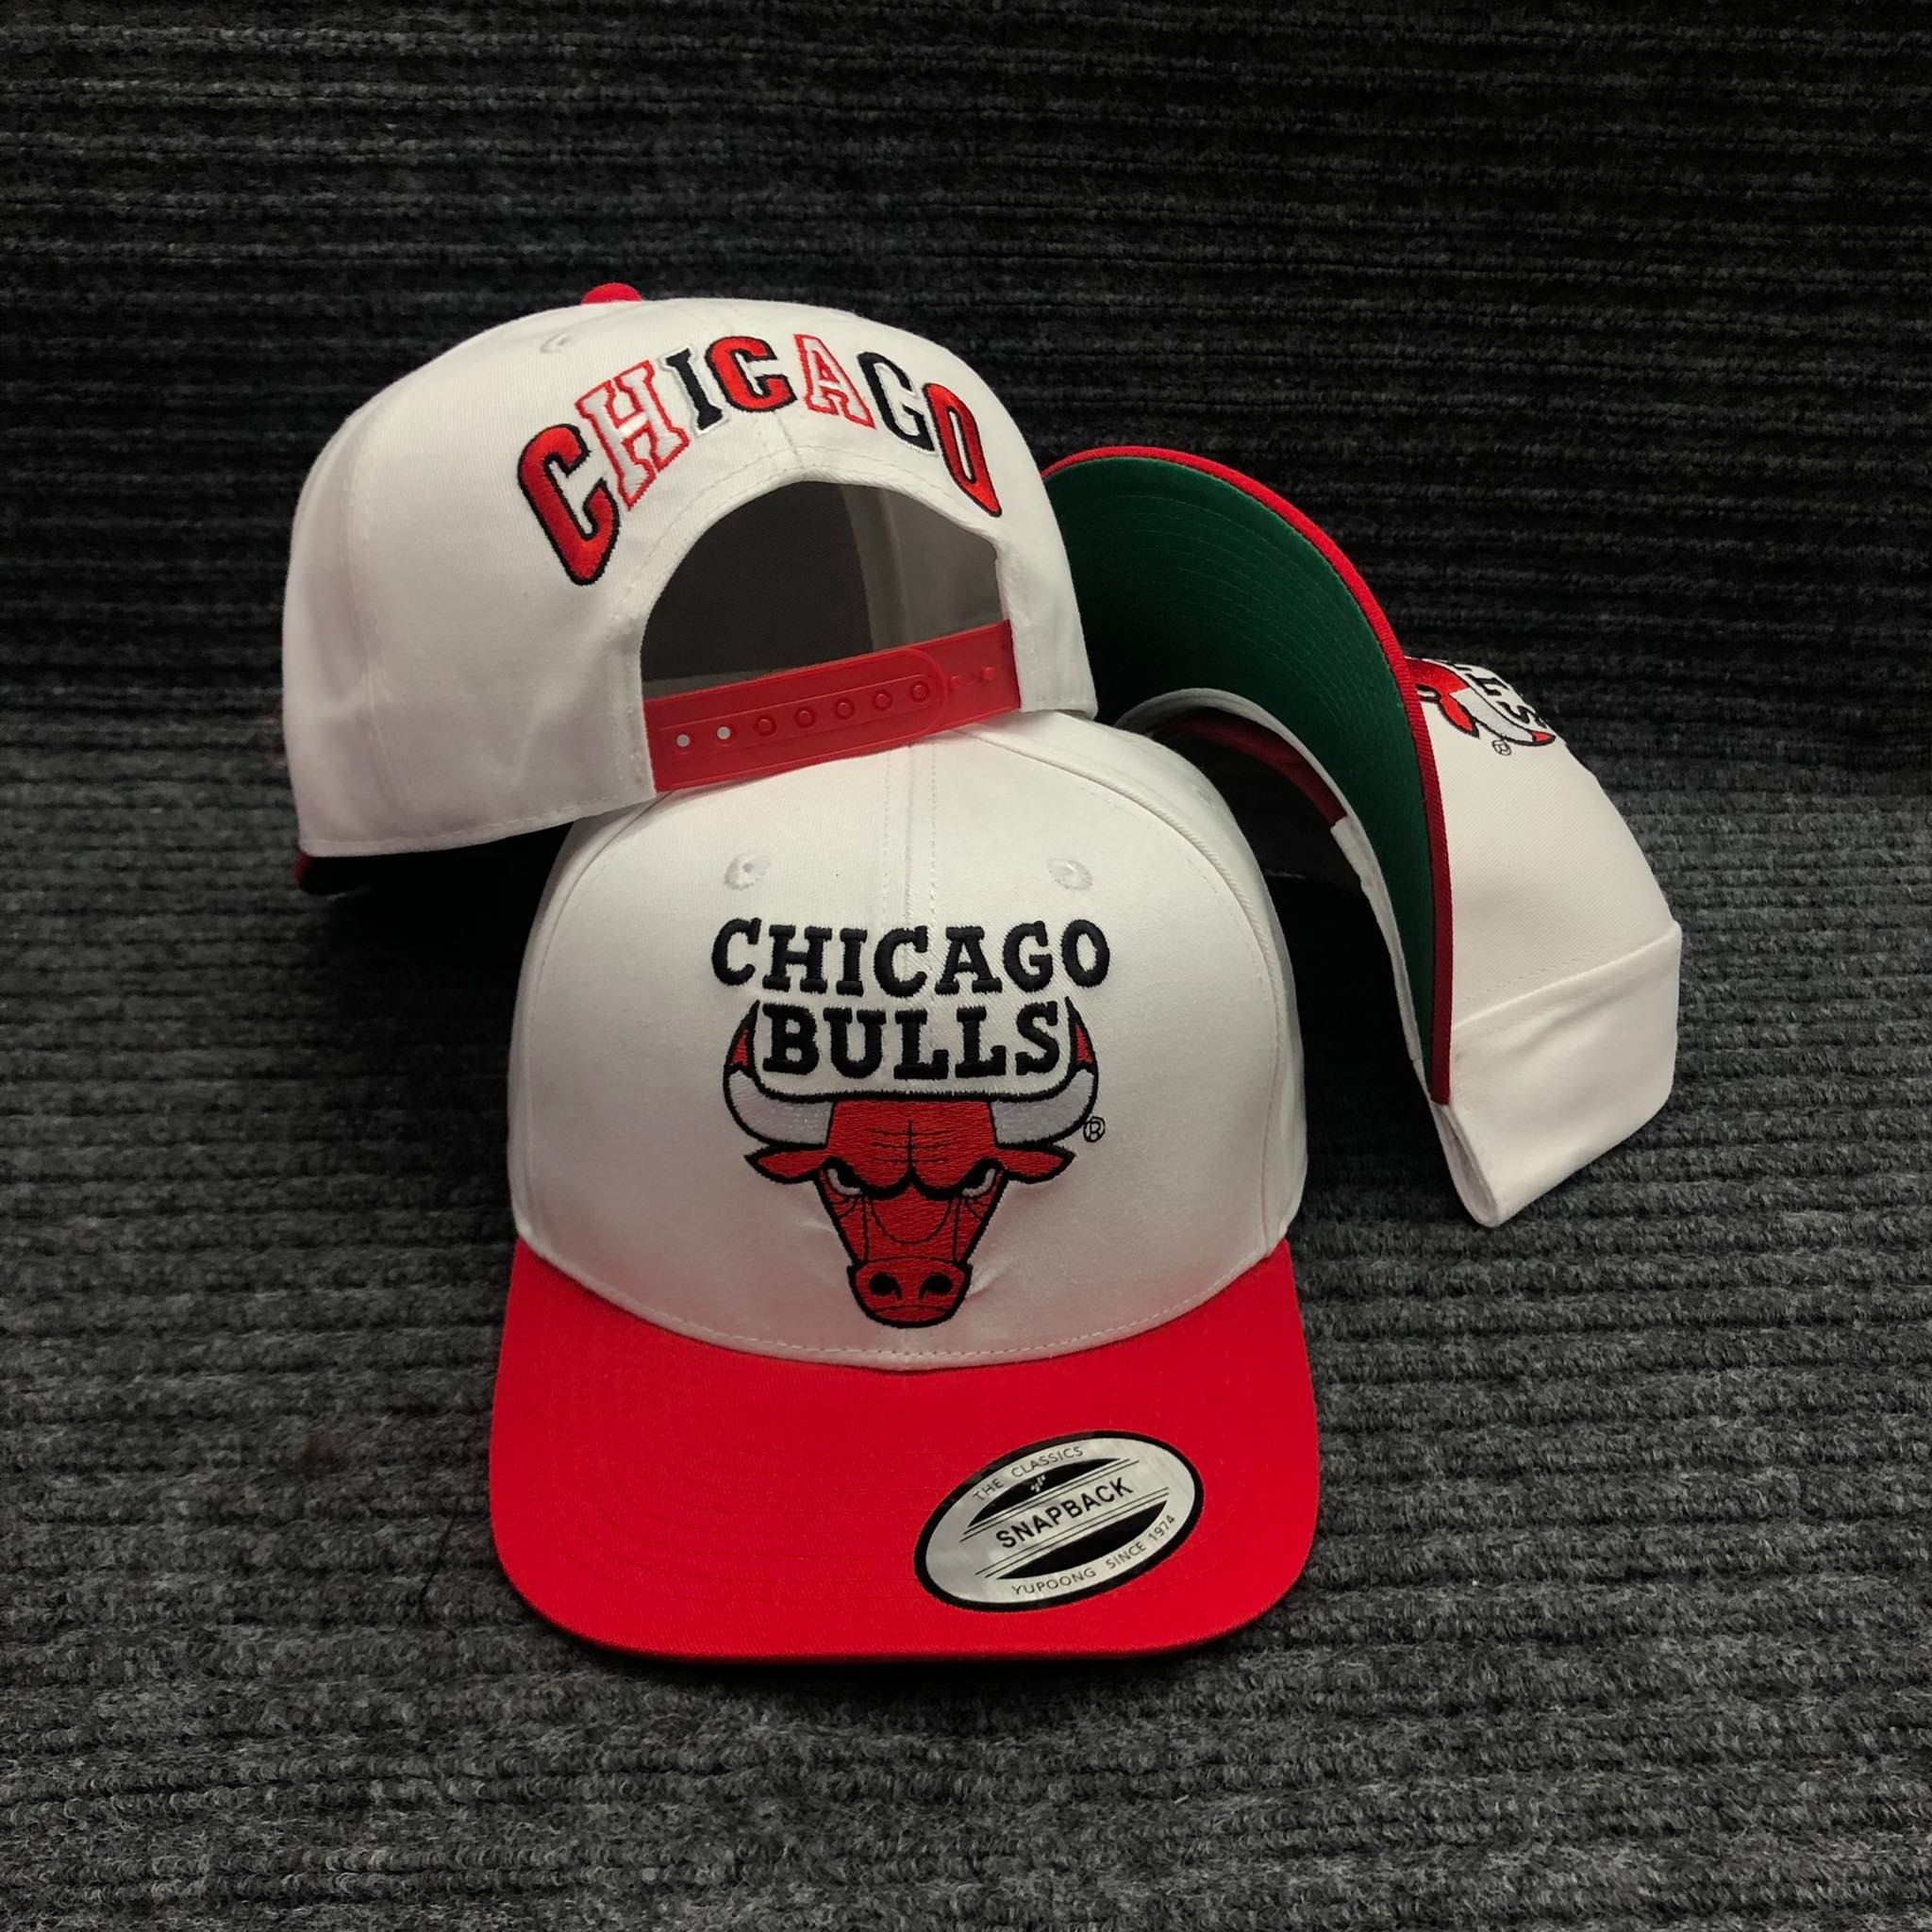 Vintage NWT 1996 Chicago Bulls NBA Championship Snapback Cap 